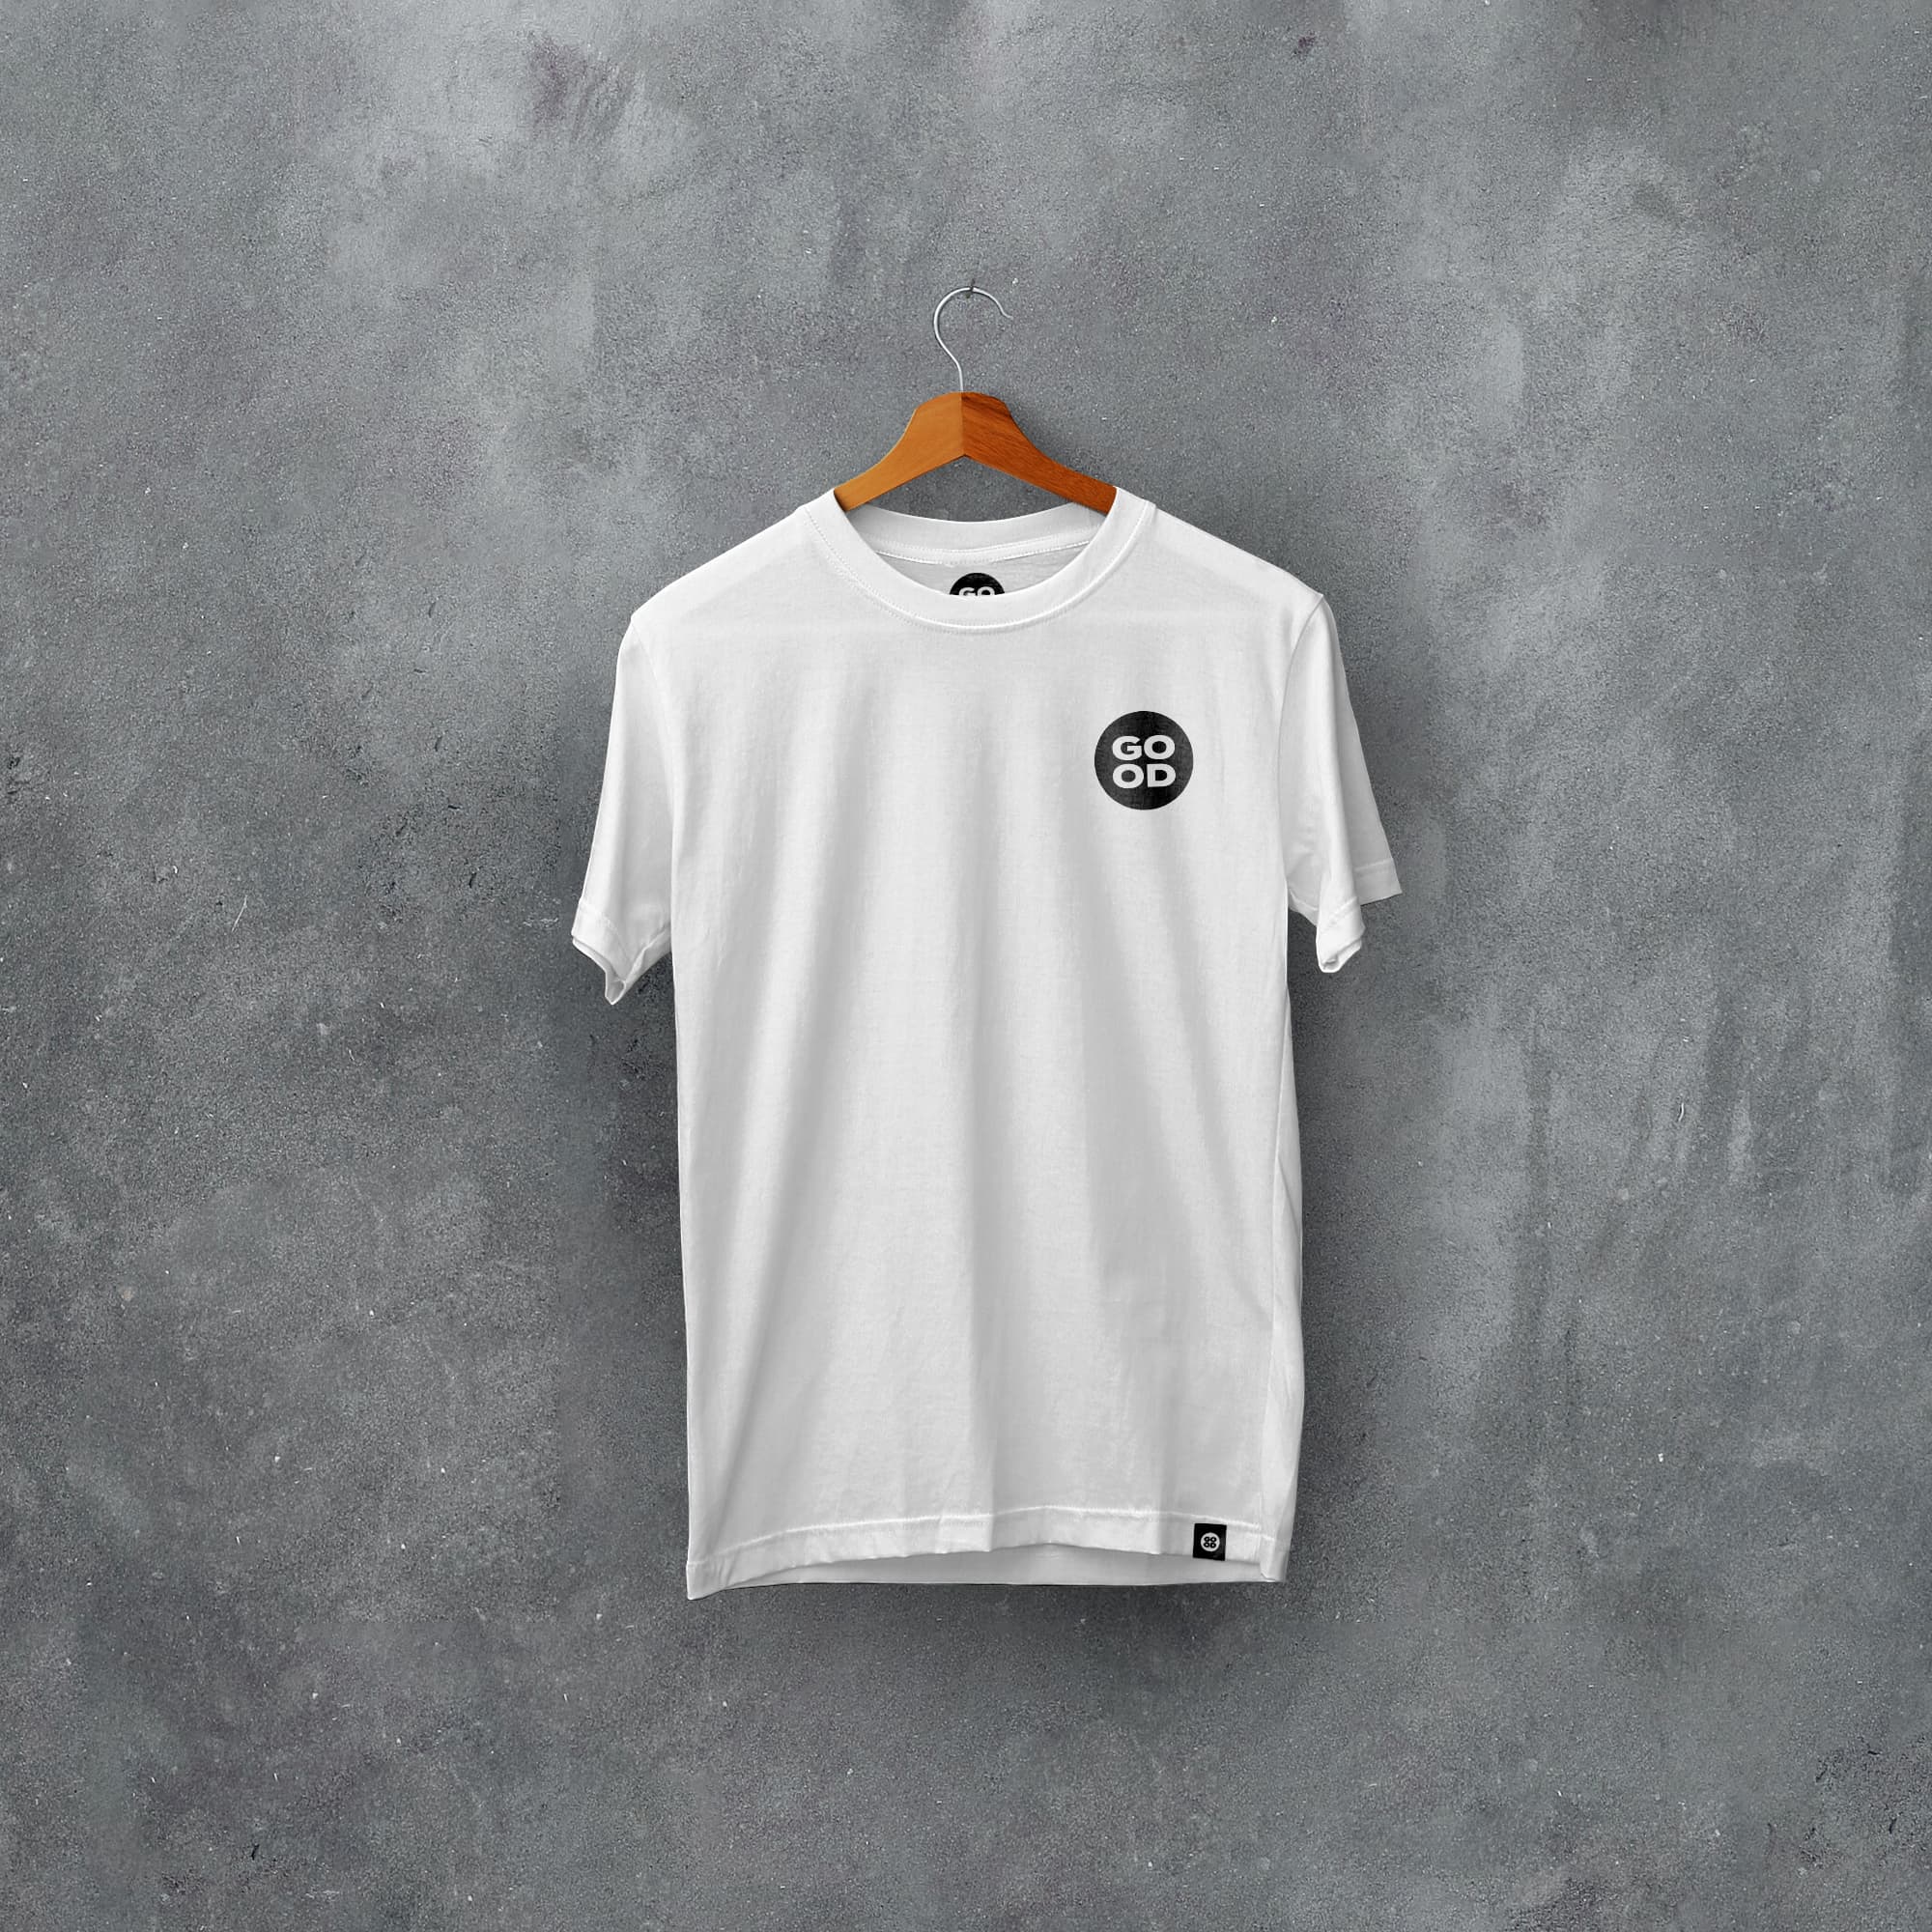 Manchester Utd Classic Kits Football T-Shirt